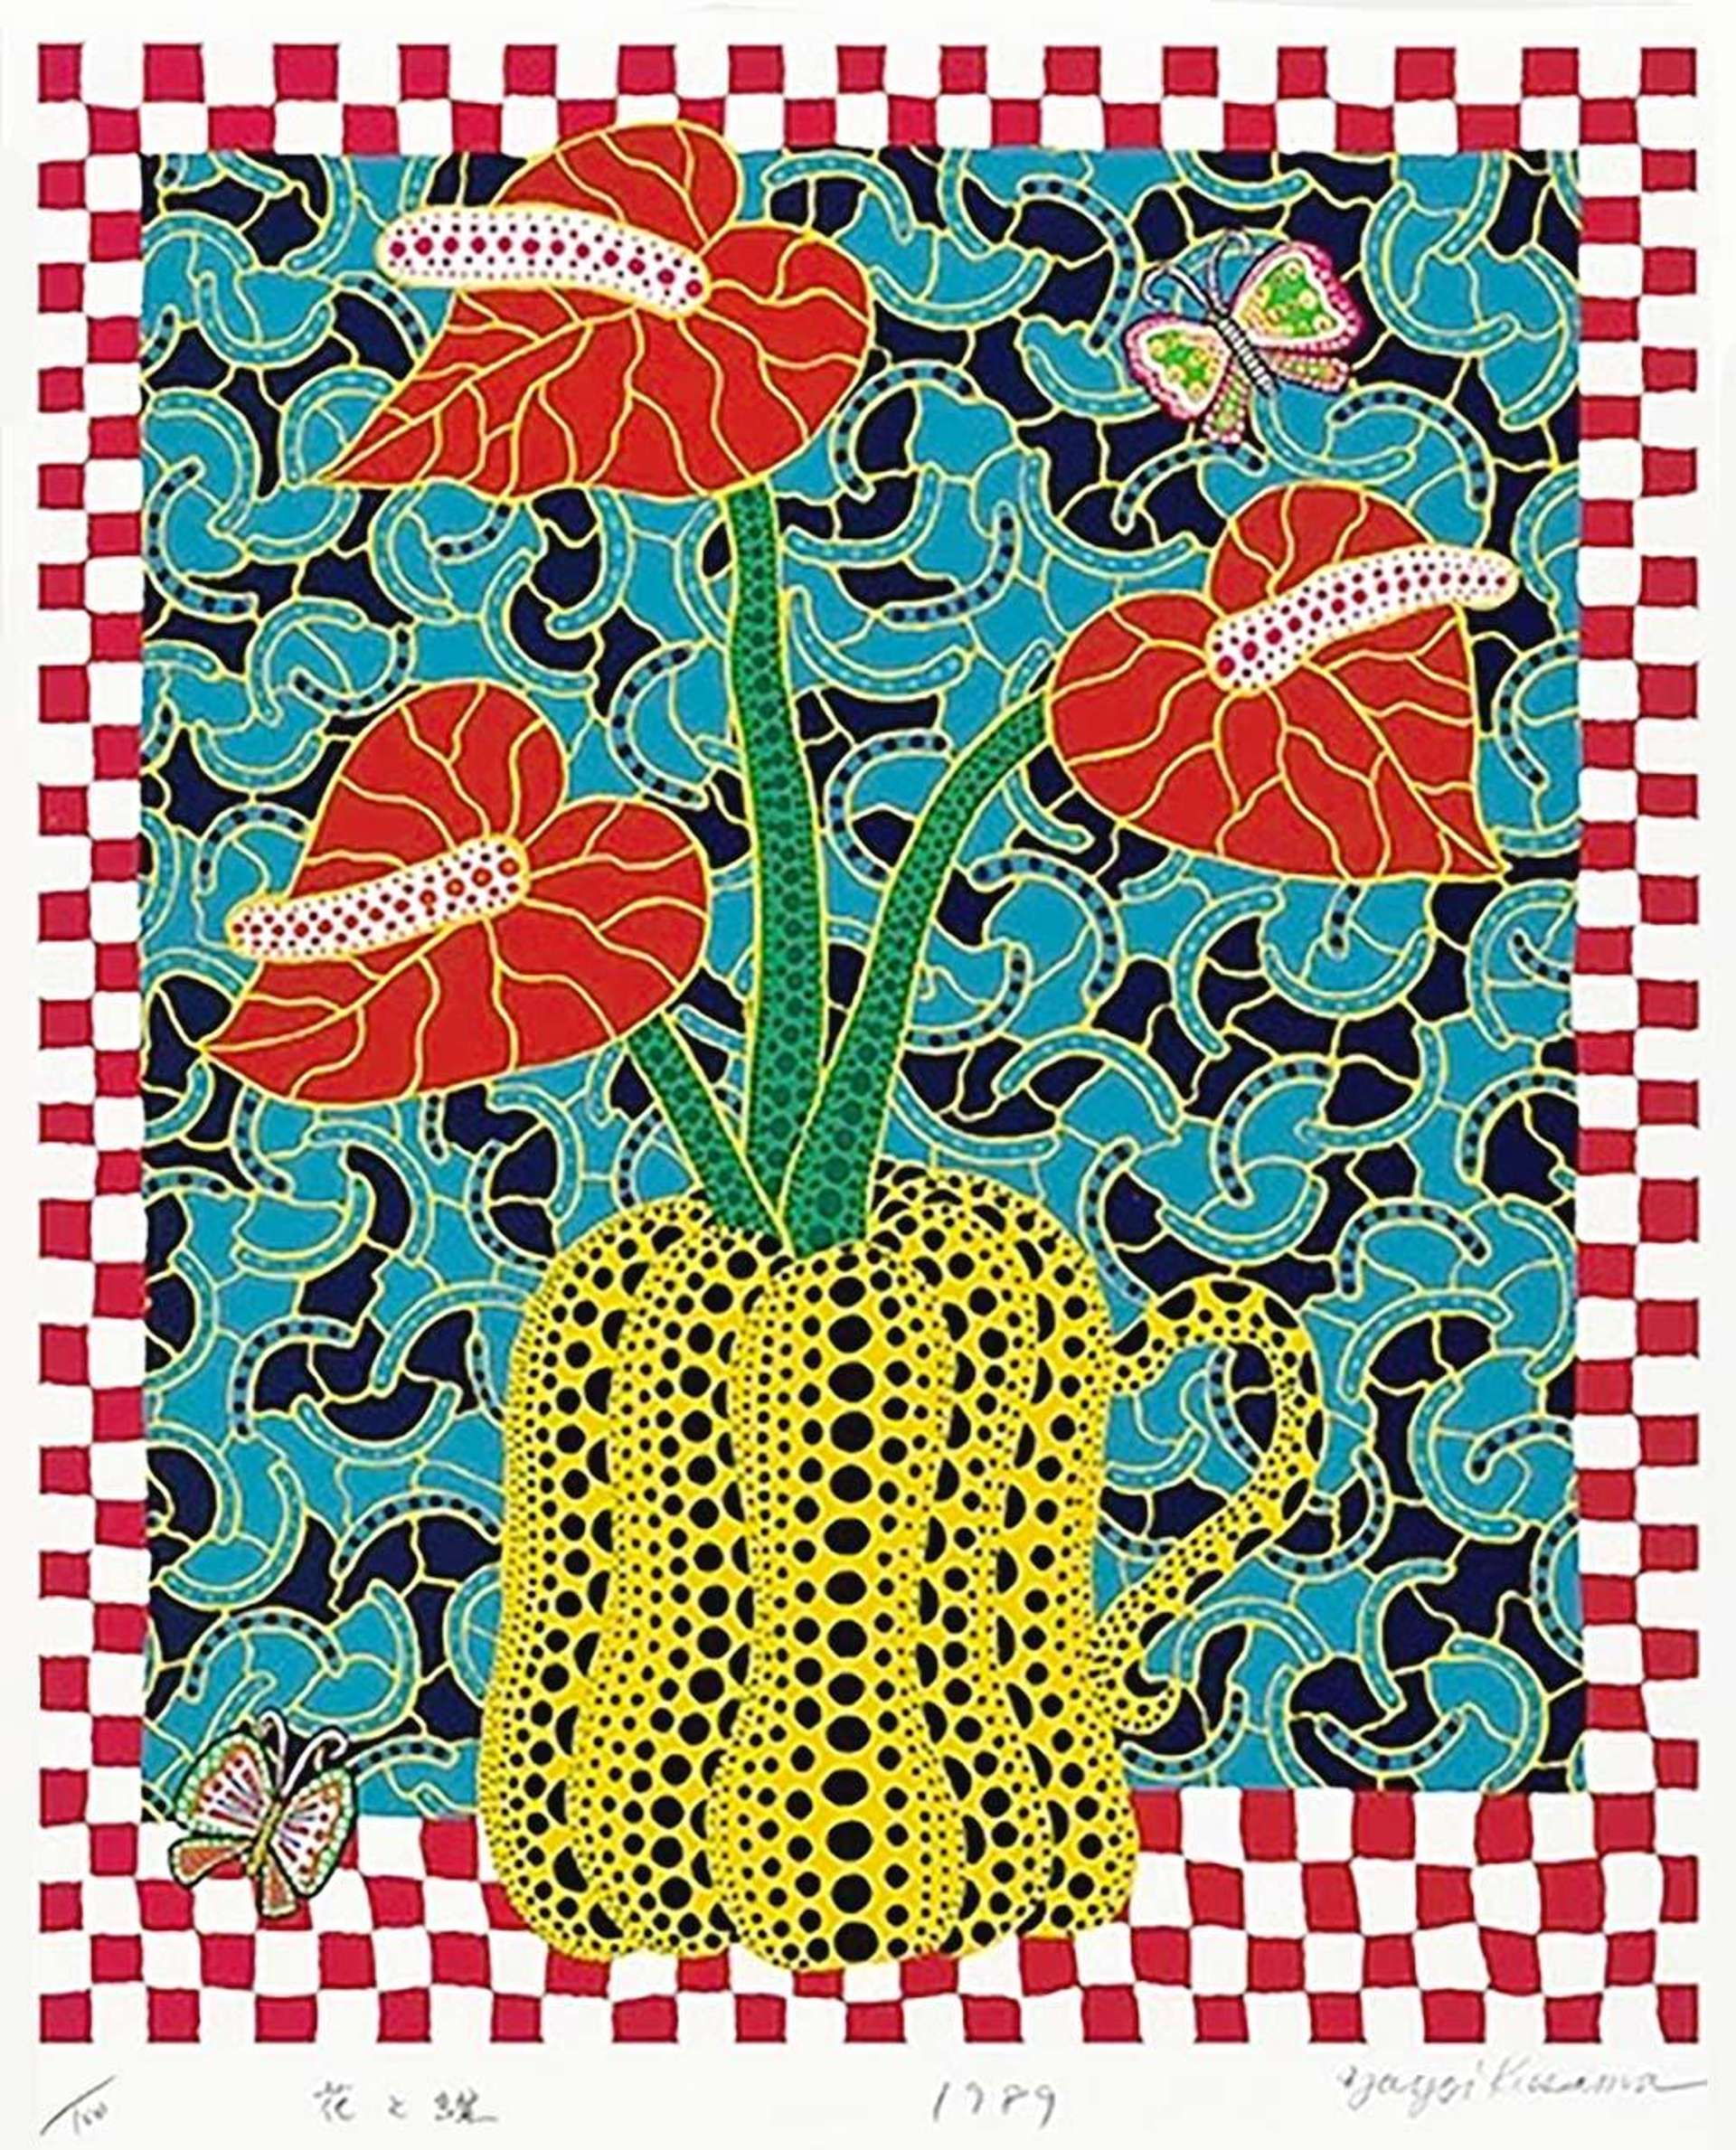 Flowers And Butterflies - Signed Print by Yayoi Kusama 1989 - MyArtBroker